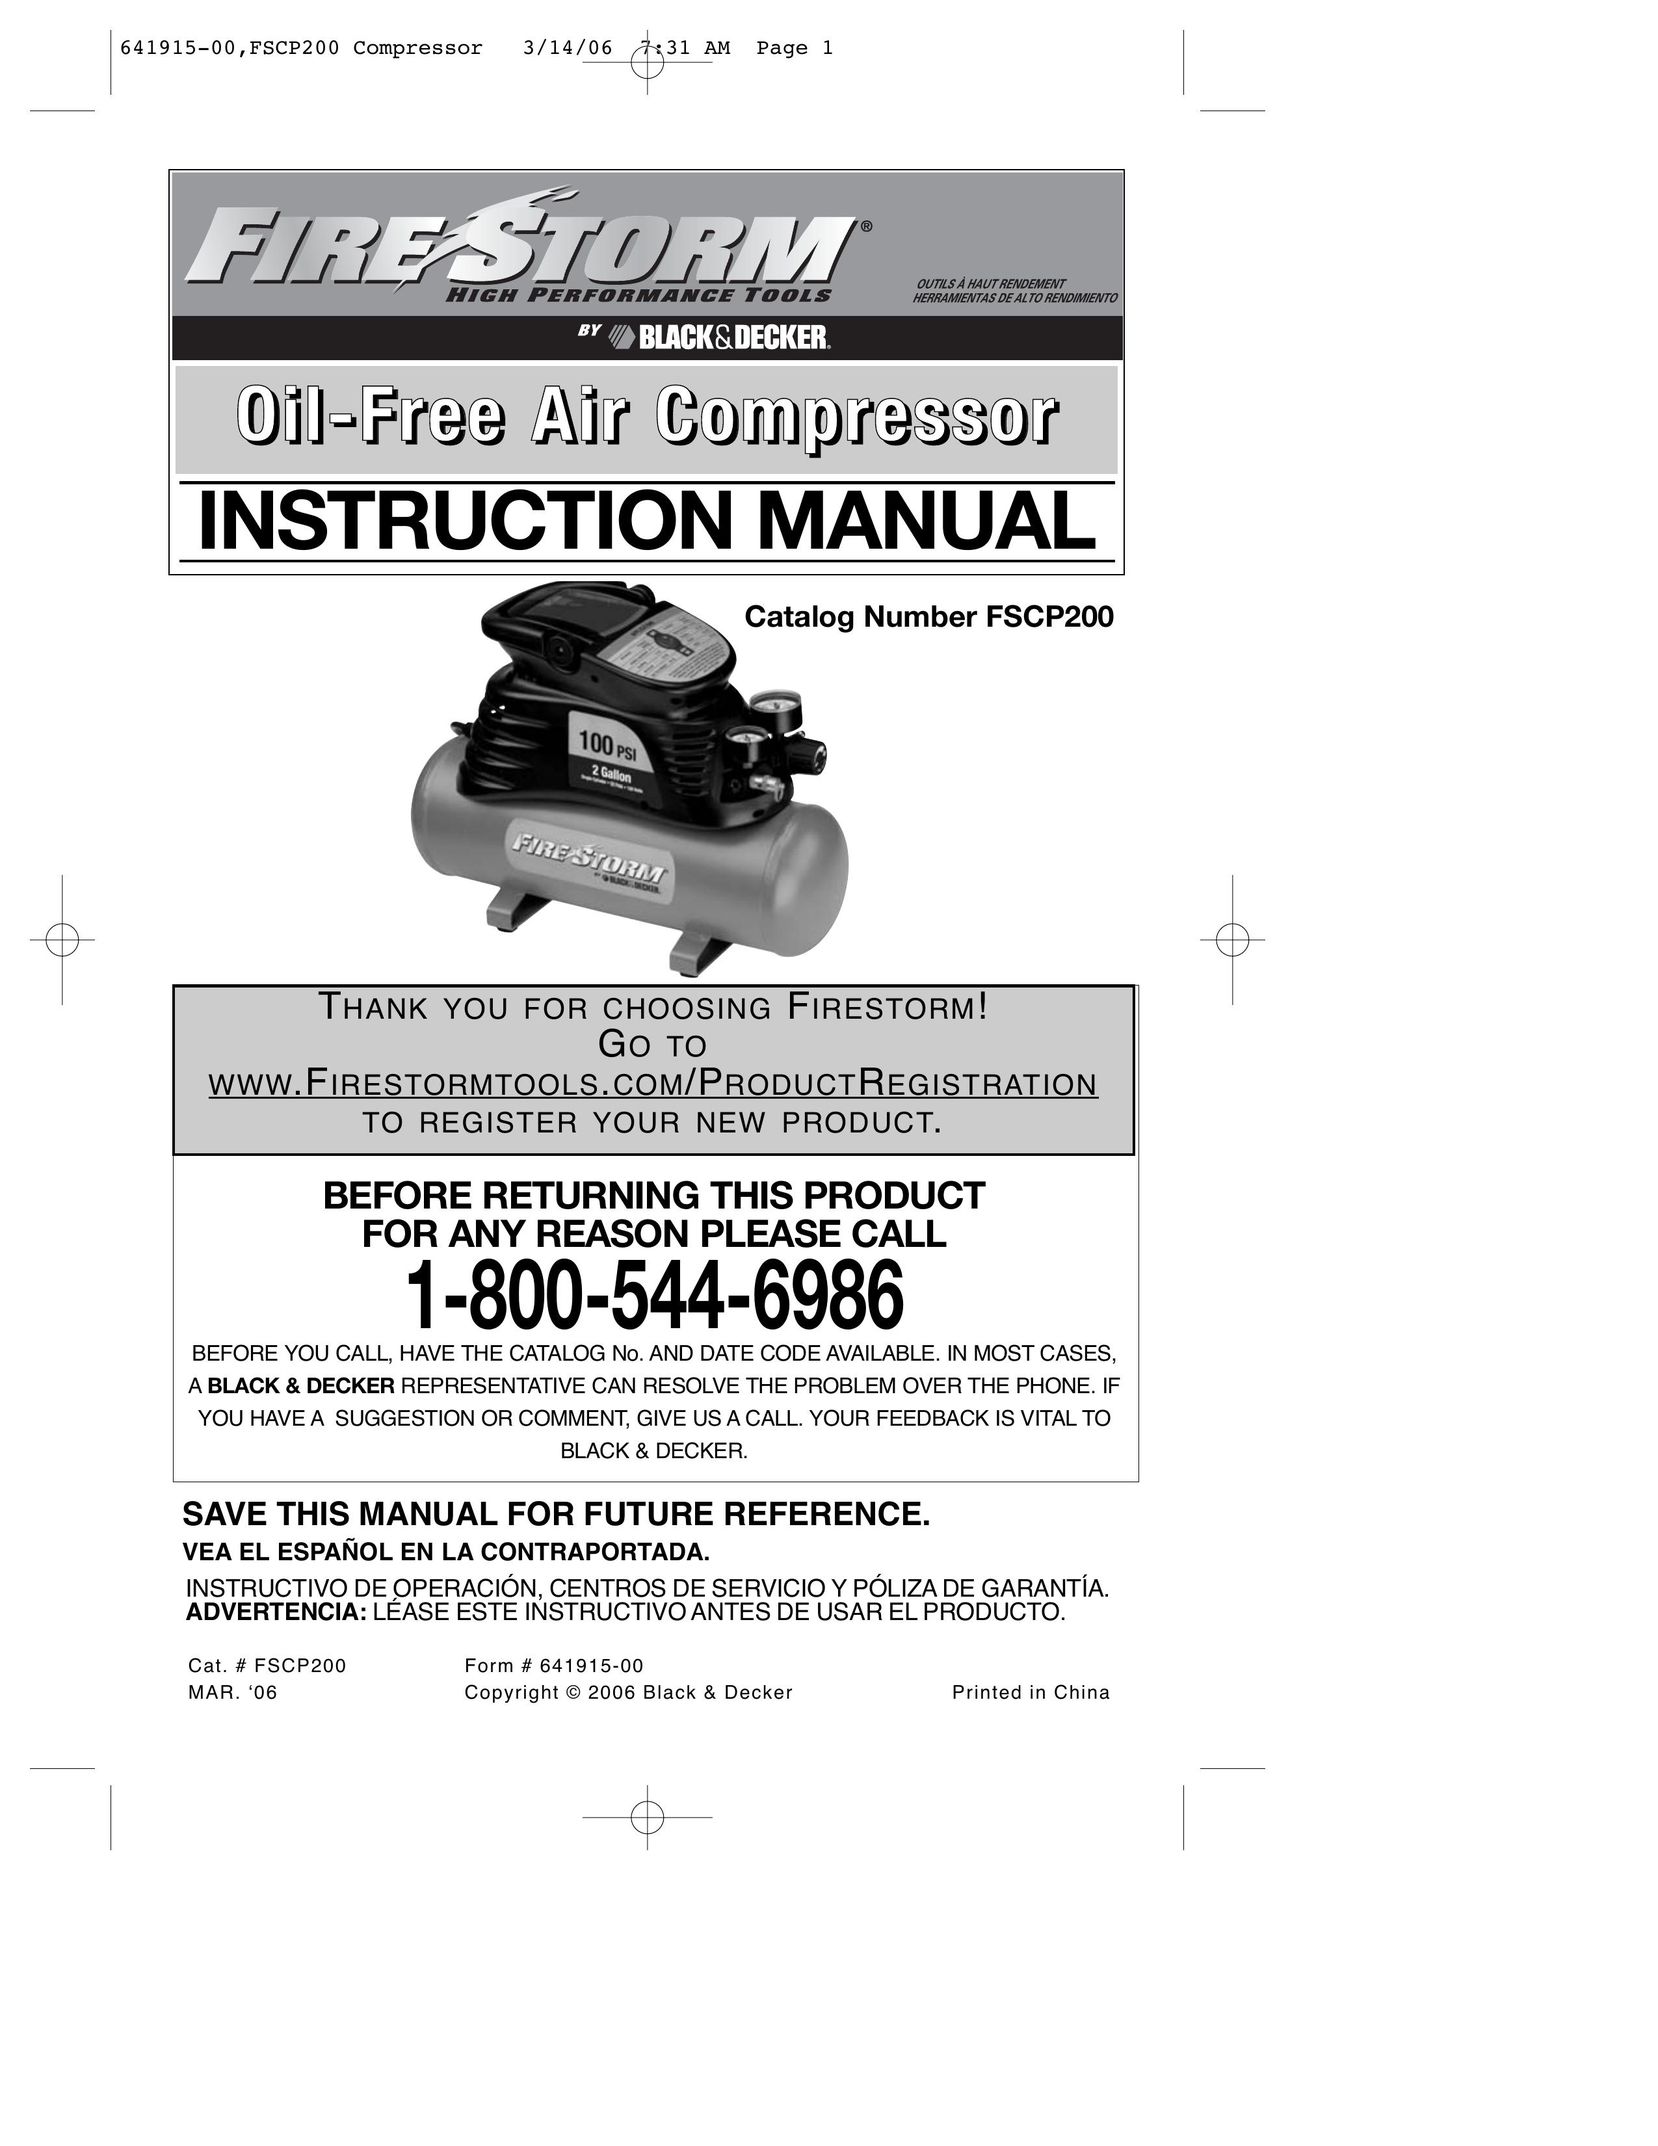 Black & Decker 641915-00 Air Compressor User Manual